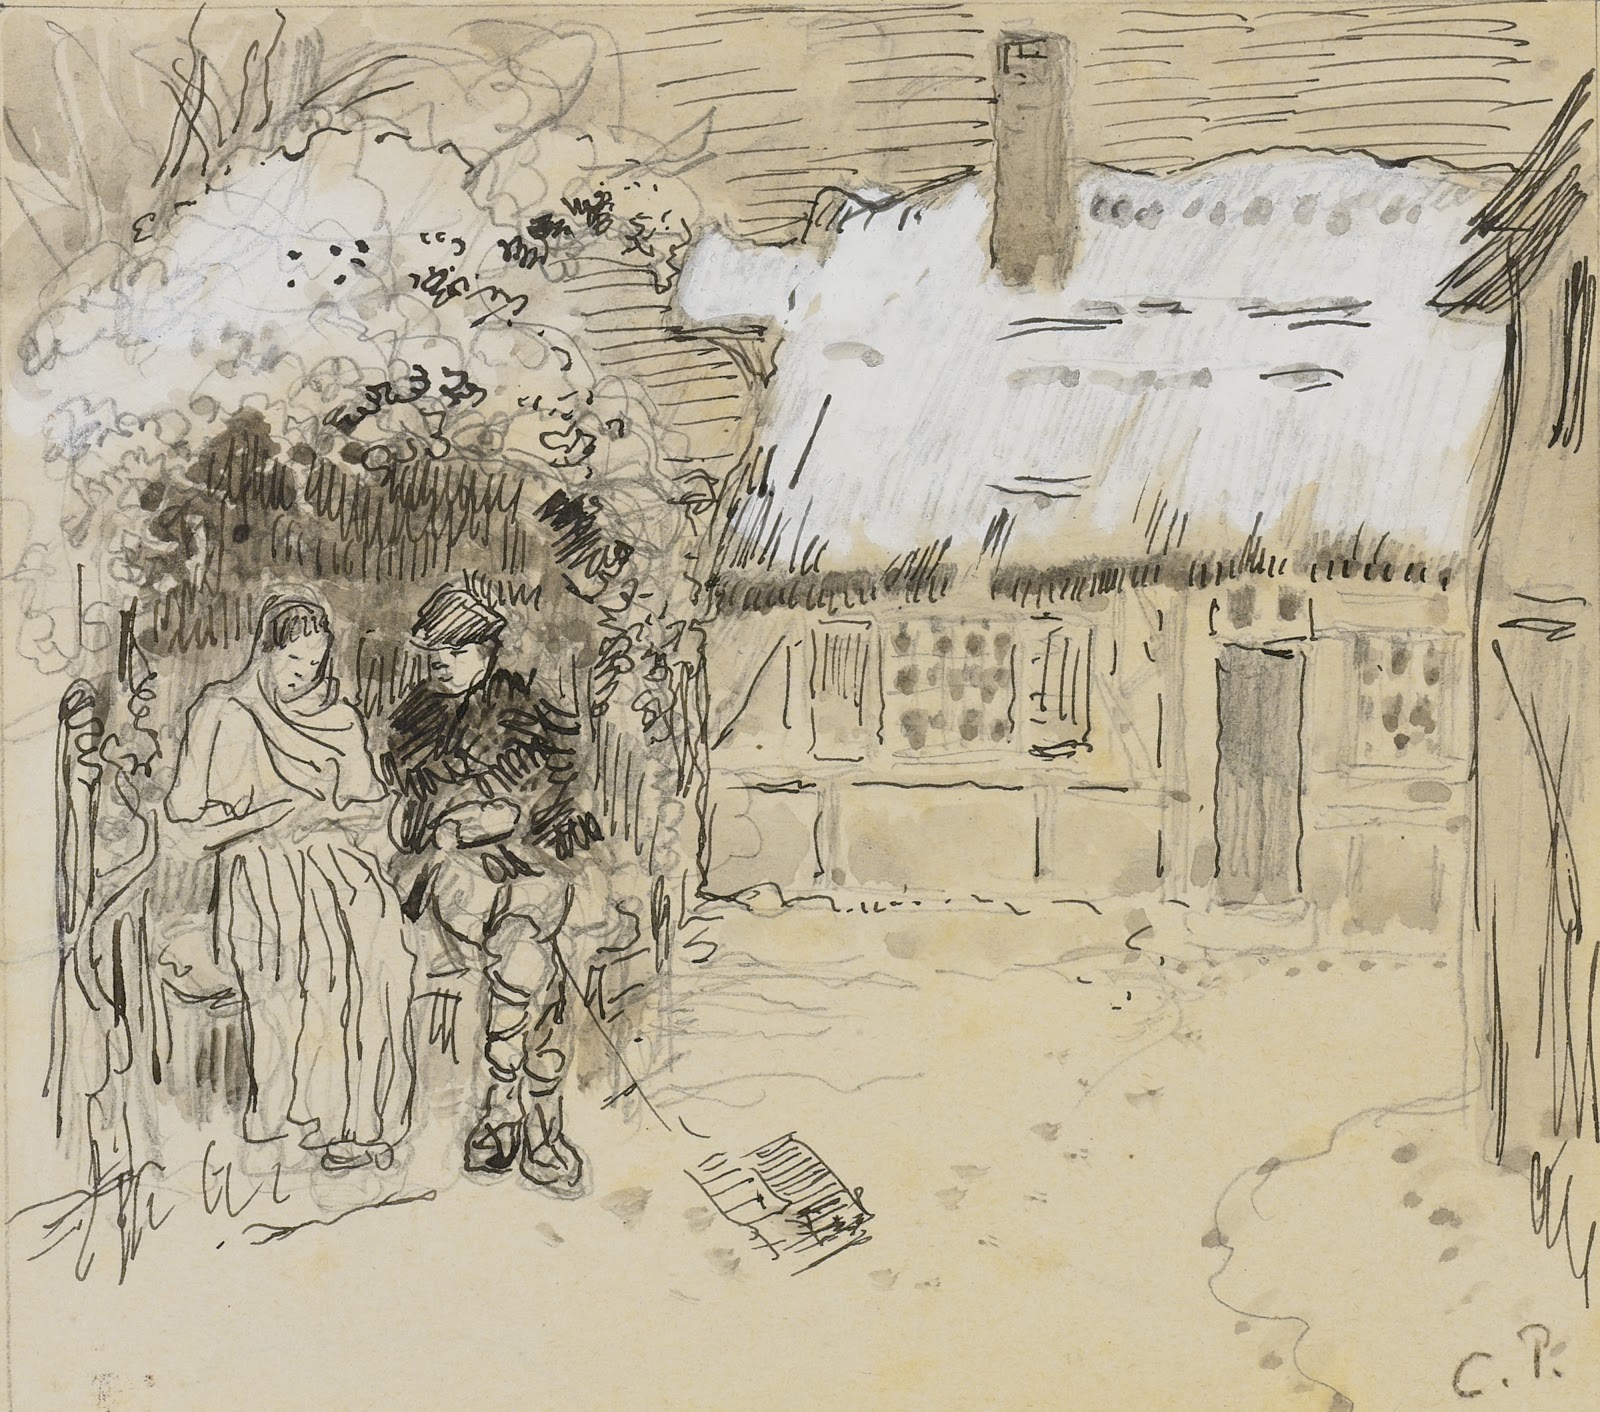 Camille+Pissarro-1830-1903 (439).jpg